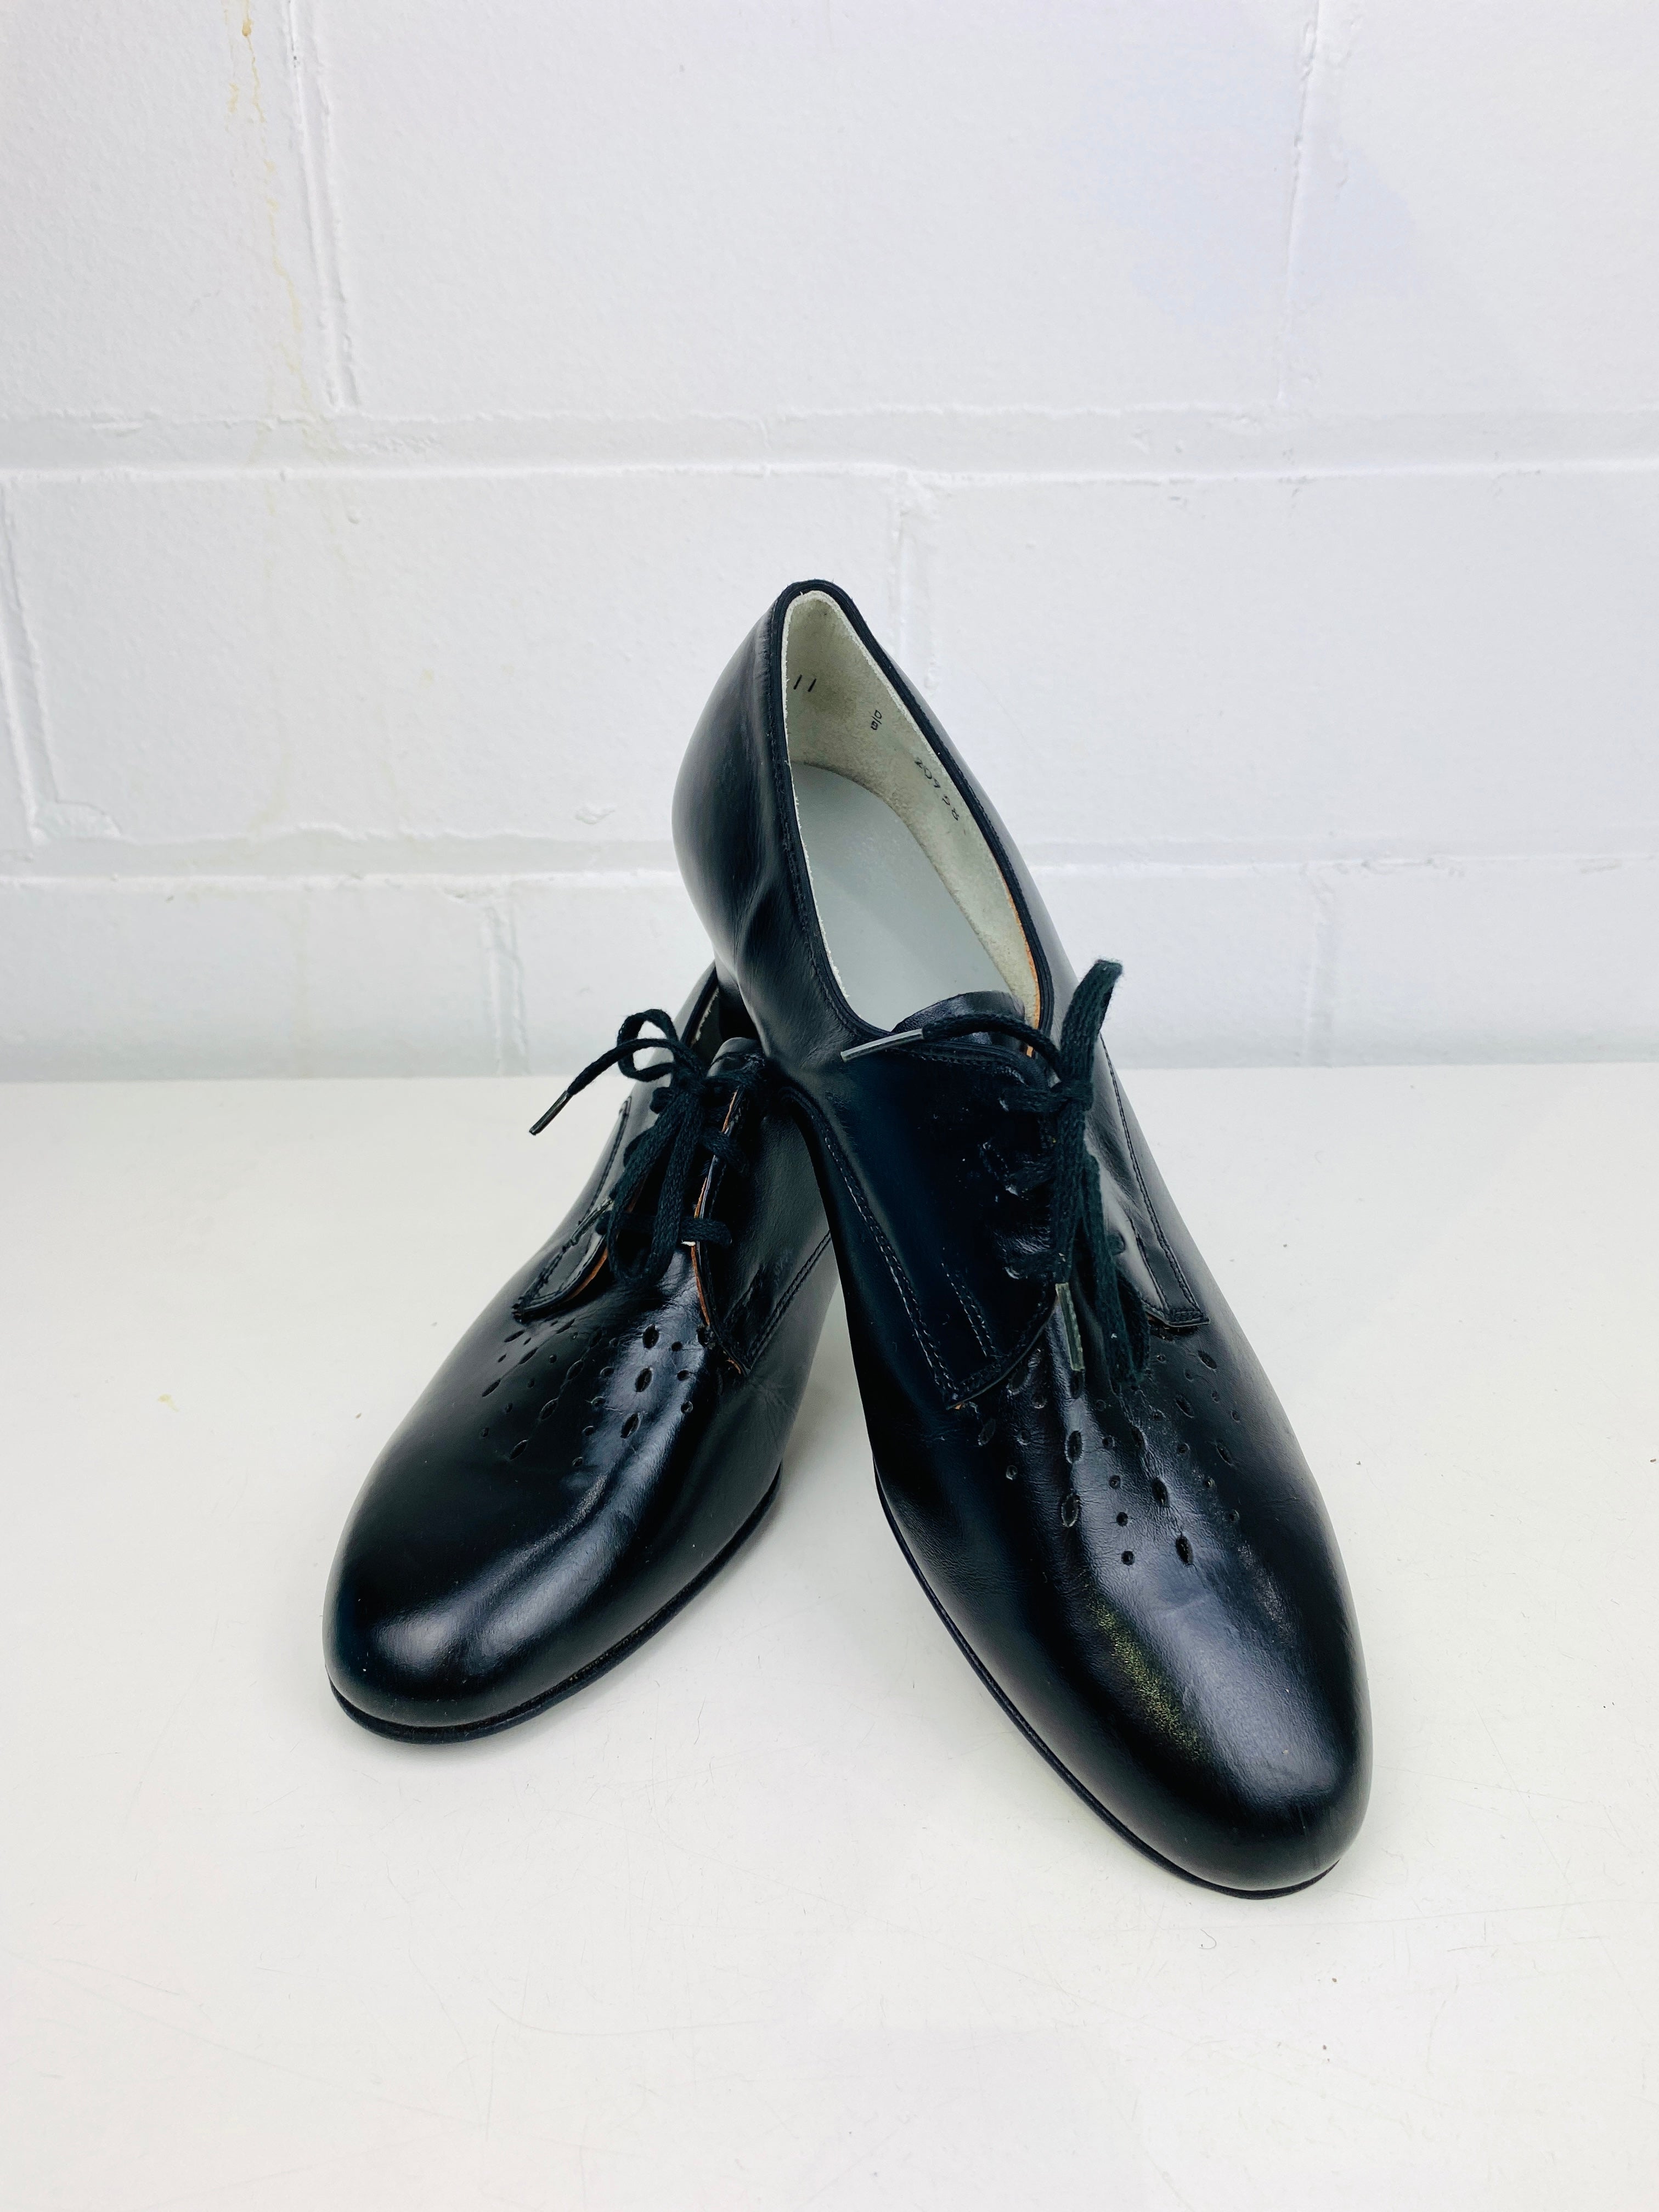 Mens Black Cuban Heel Leather boots Shoes Slip On ZIP Smart Formal | eBay